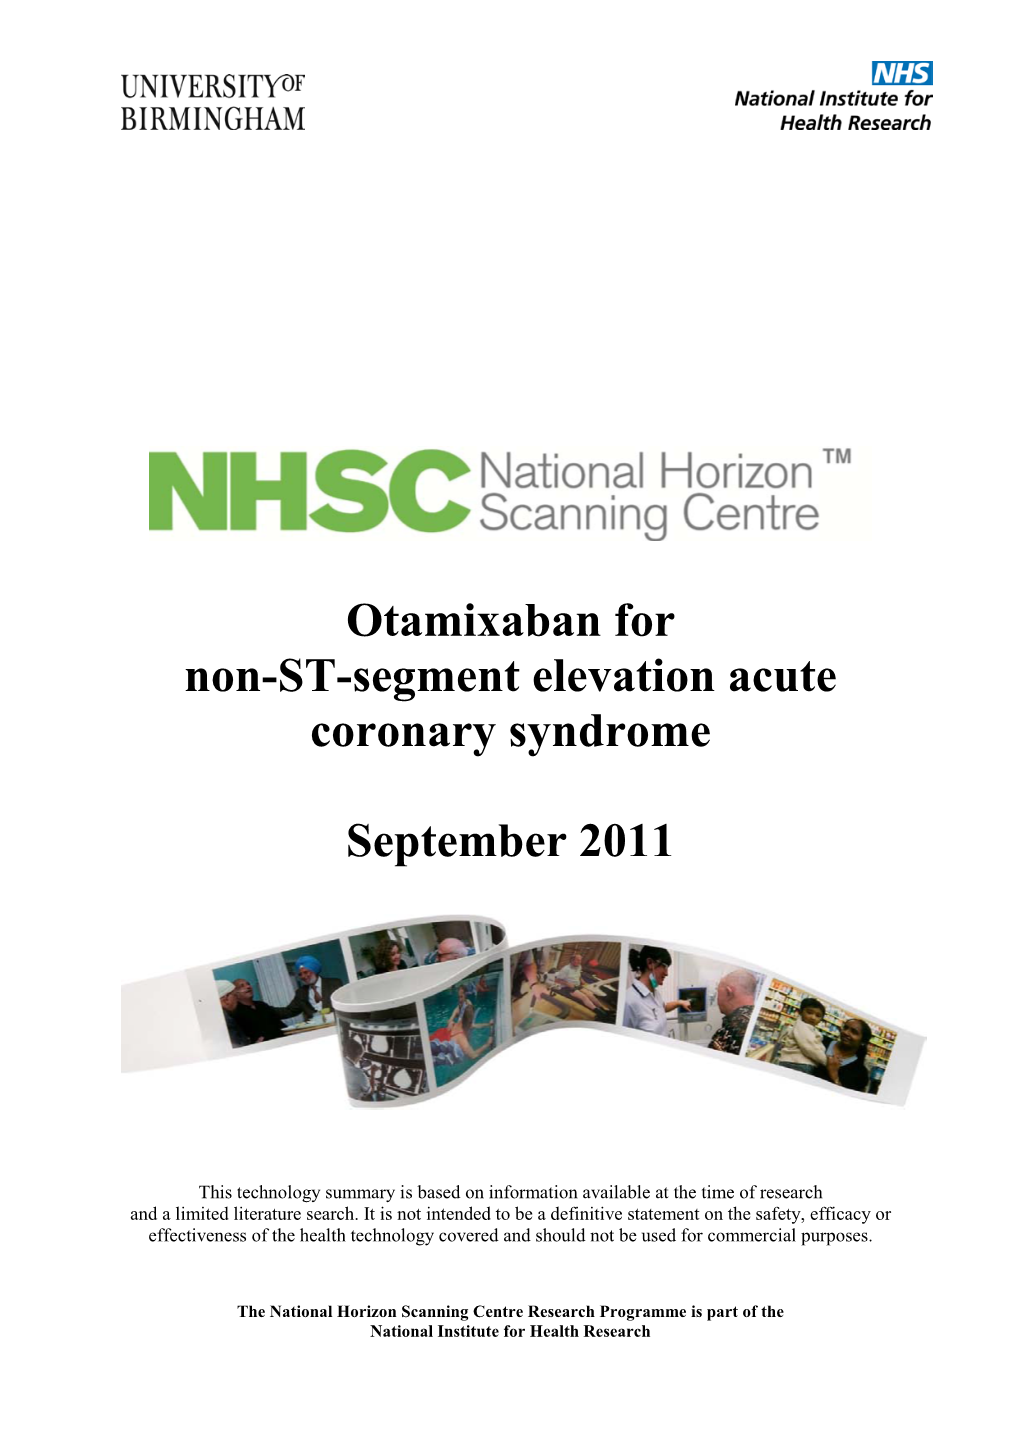 Otamixaban for Non-ST Elevation Acute Coronary Syndrome (NSTE